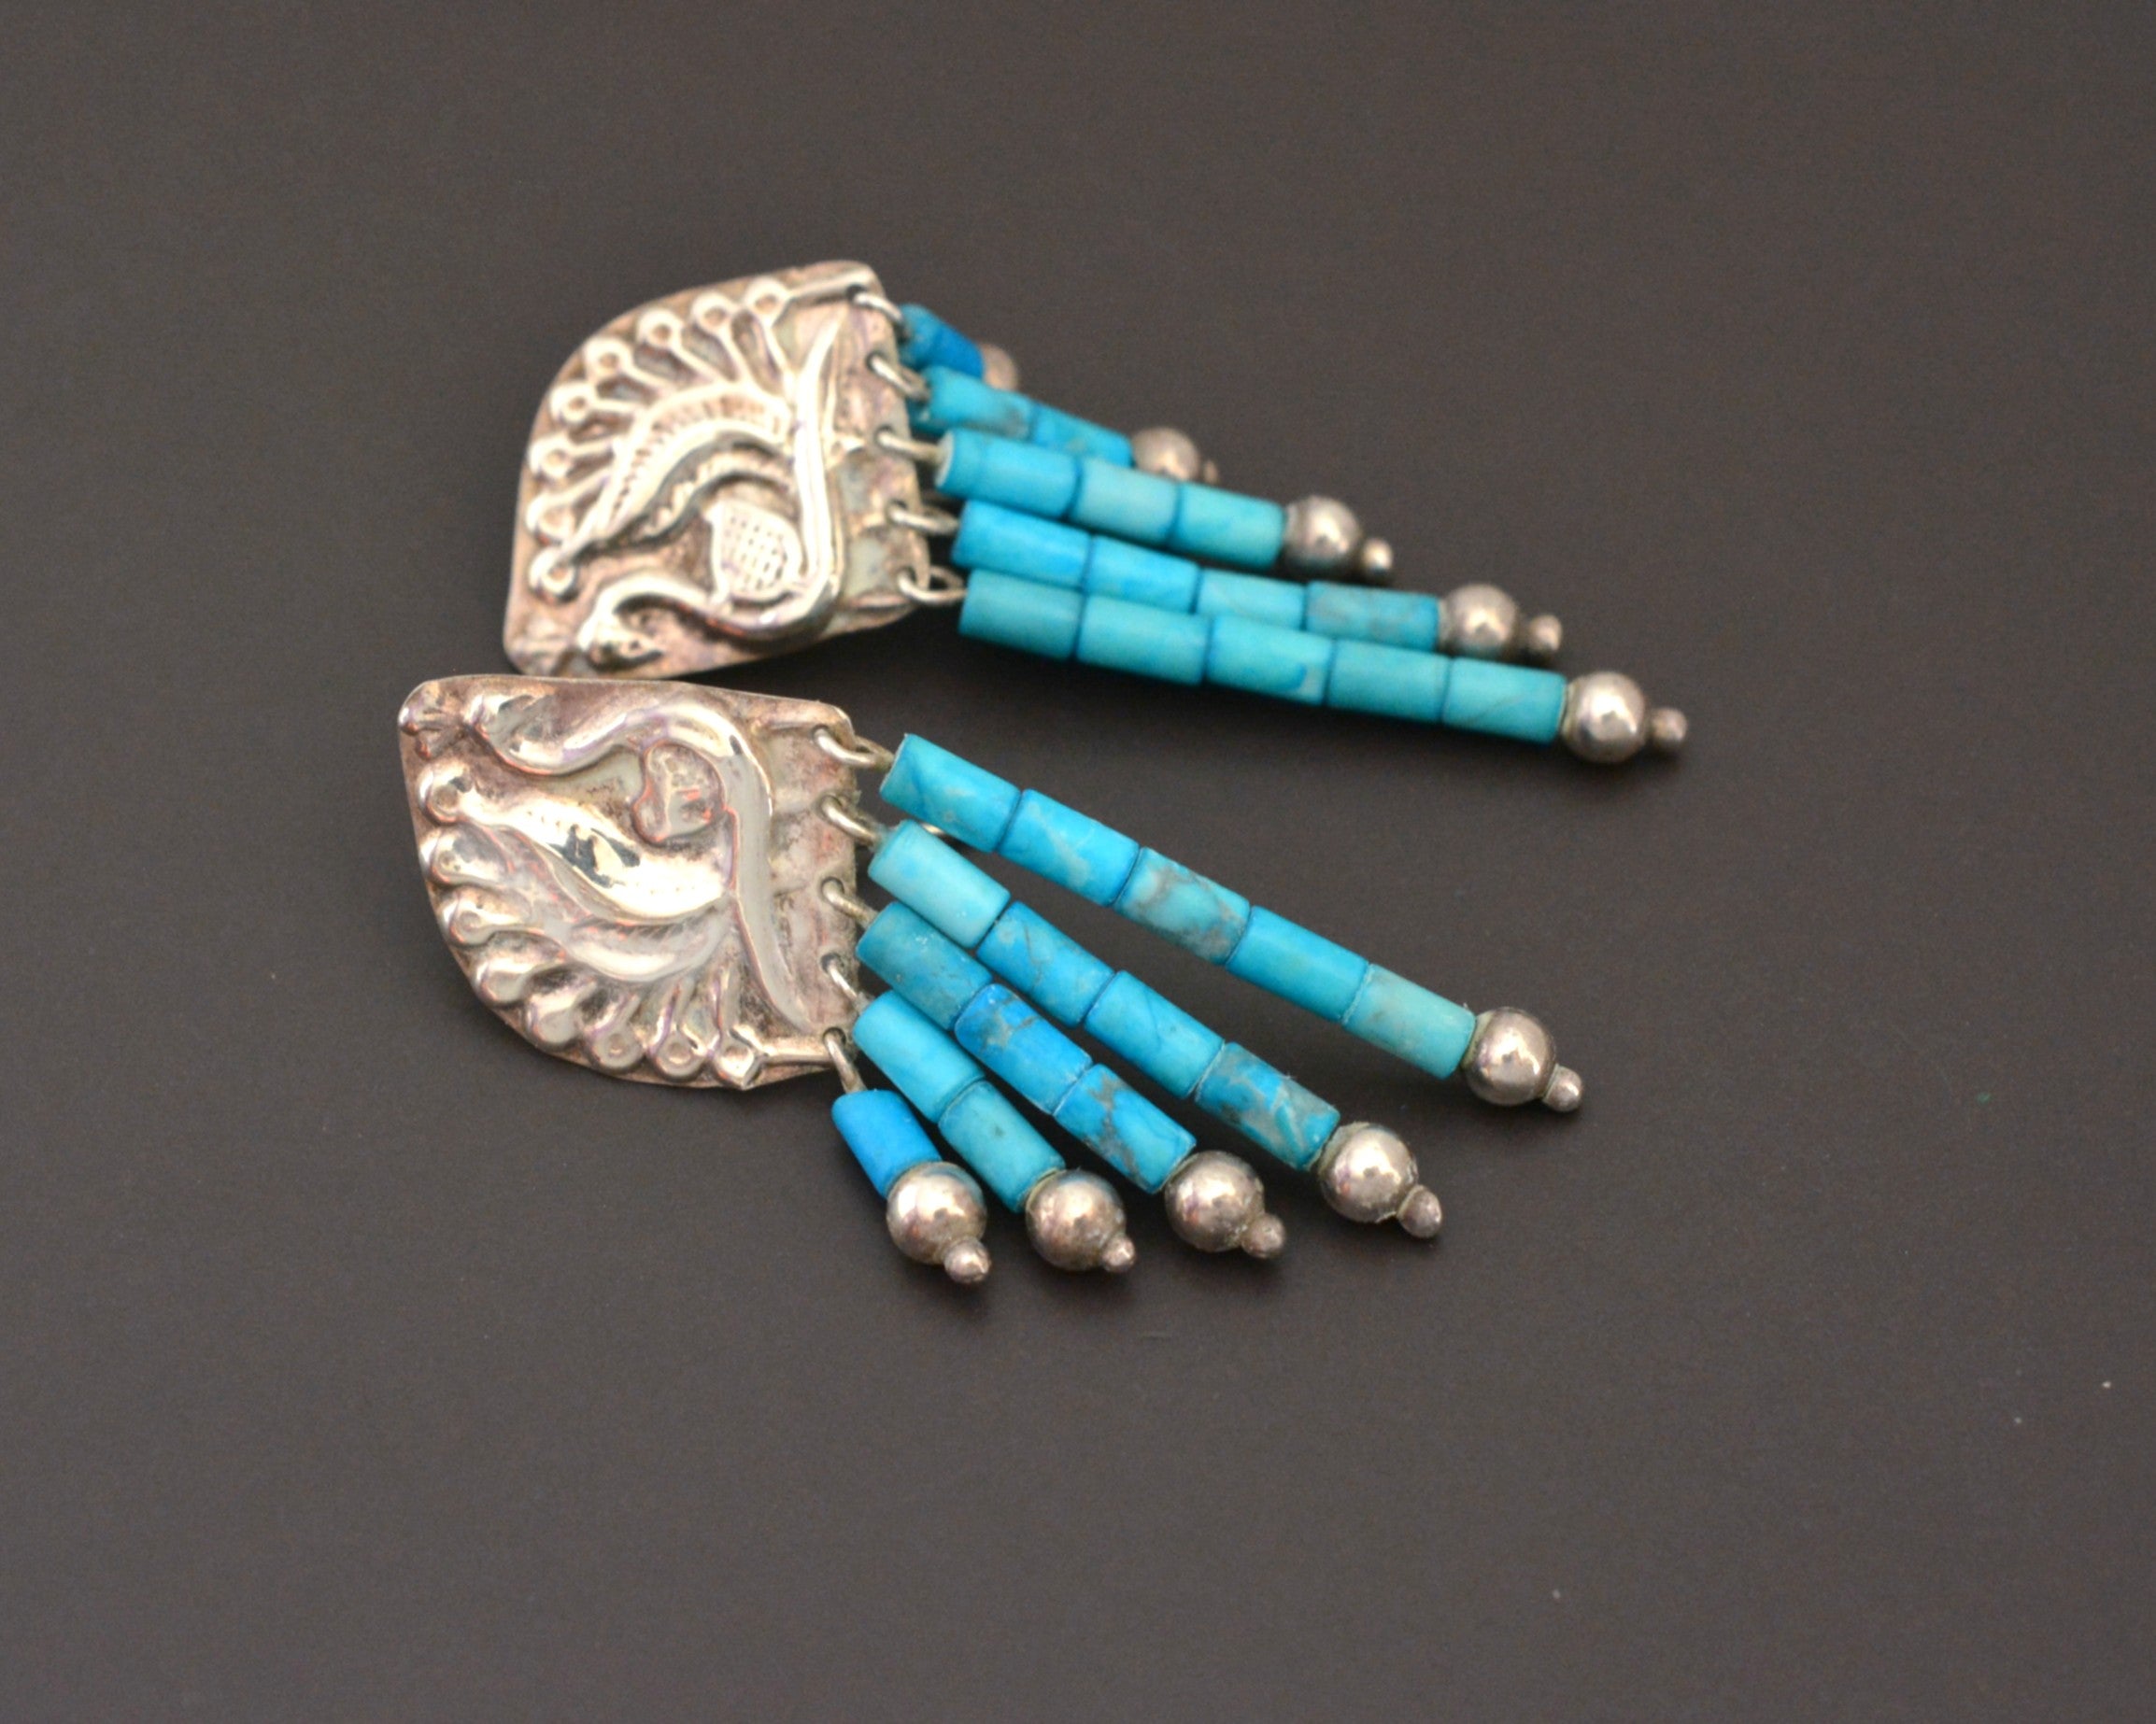 Ethnic Peacock Earrings with Turquoise Dangles